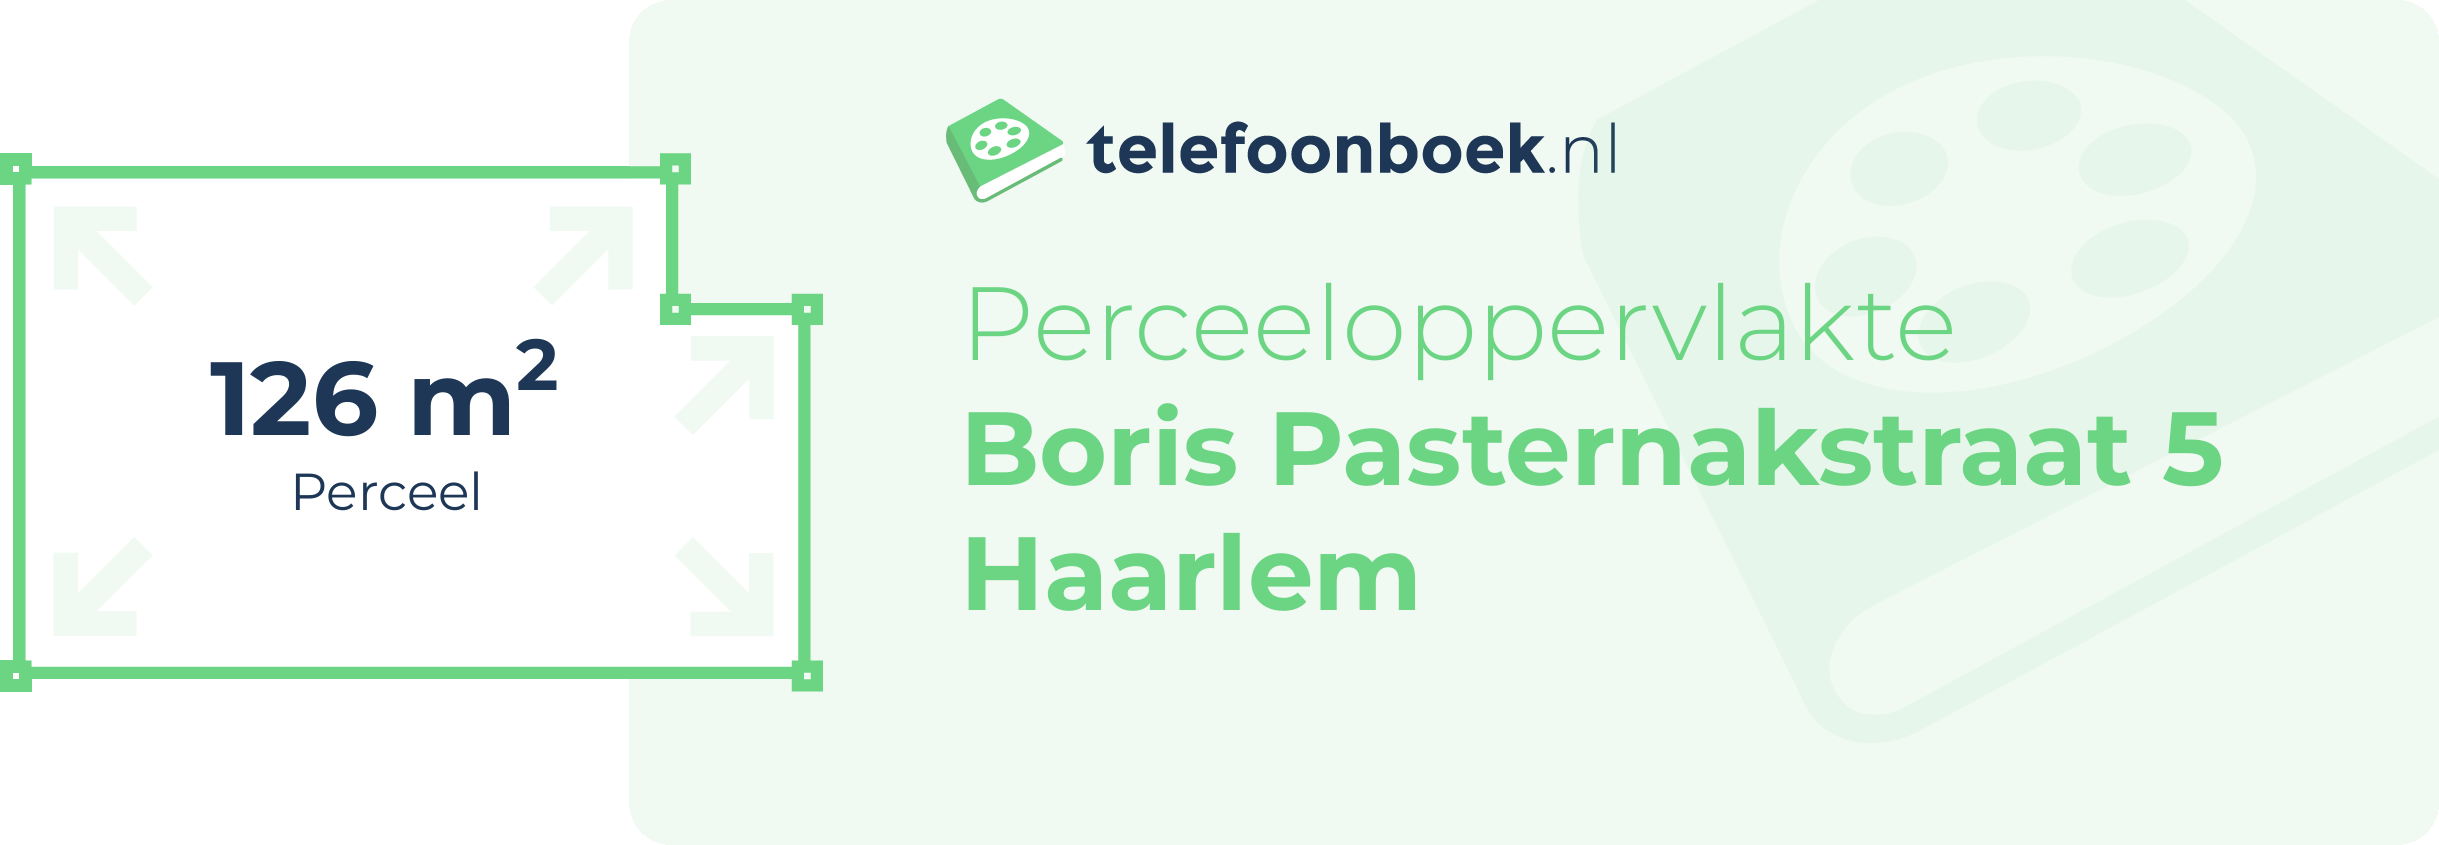 Perceeloppervlakte Boris Pasternakstraat 5 Haarlem